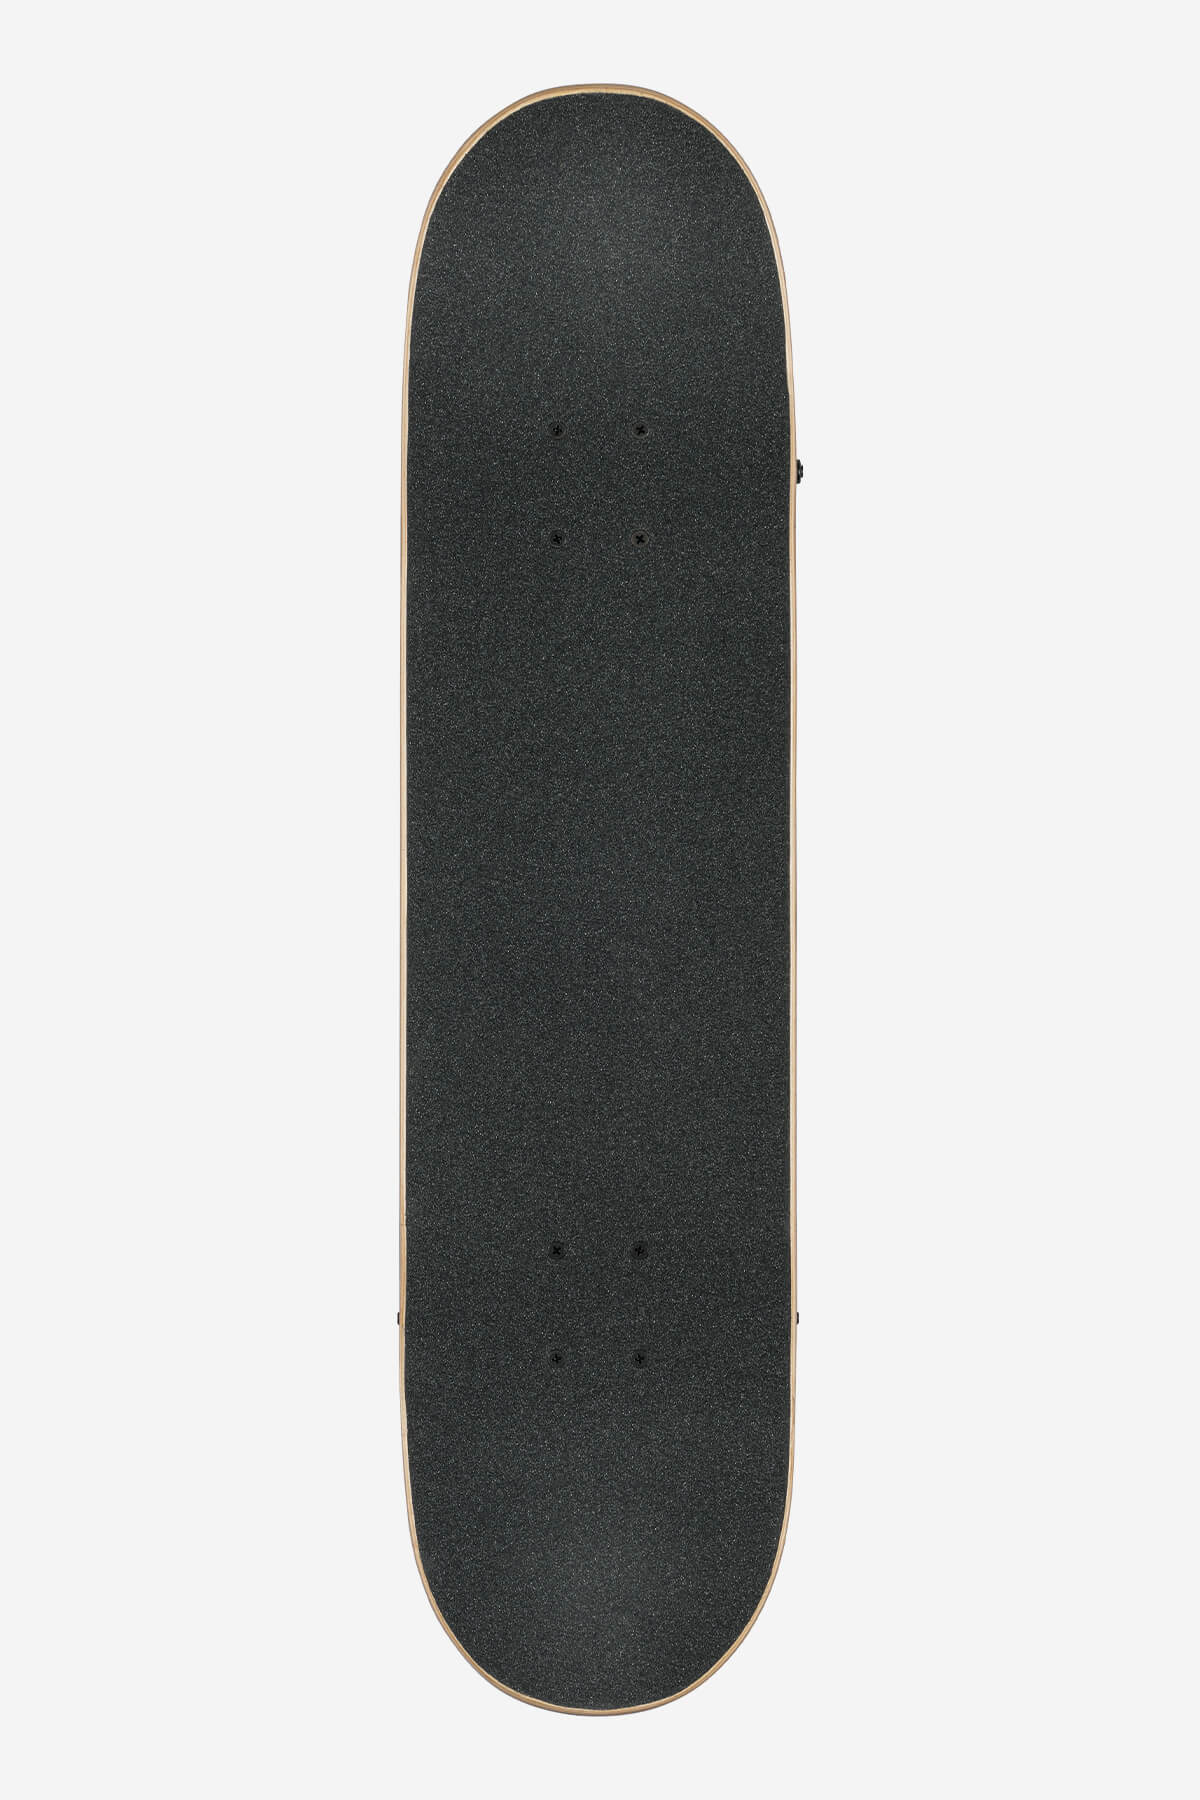 Globe - G1 Lineform - Schwarz - 7,75" Komplett Skateboard